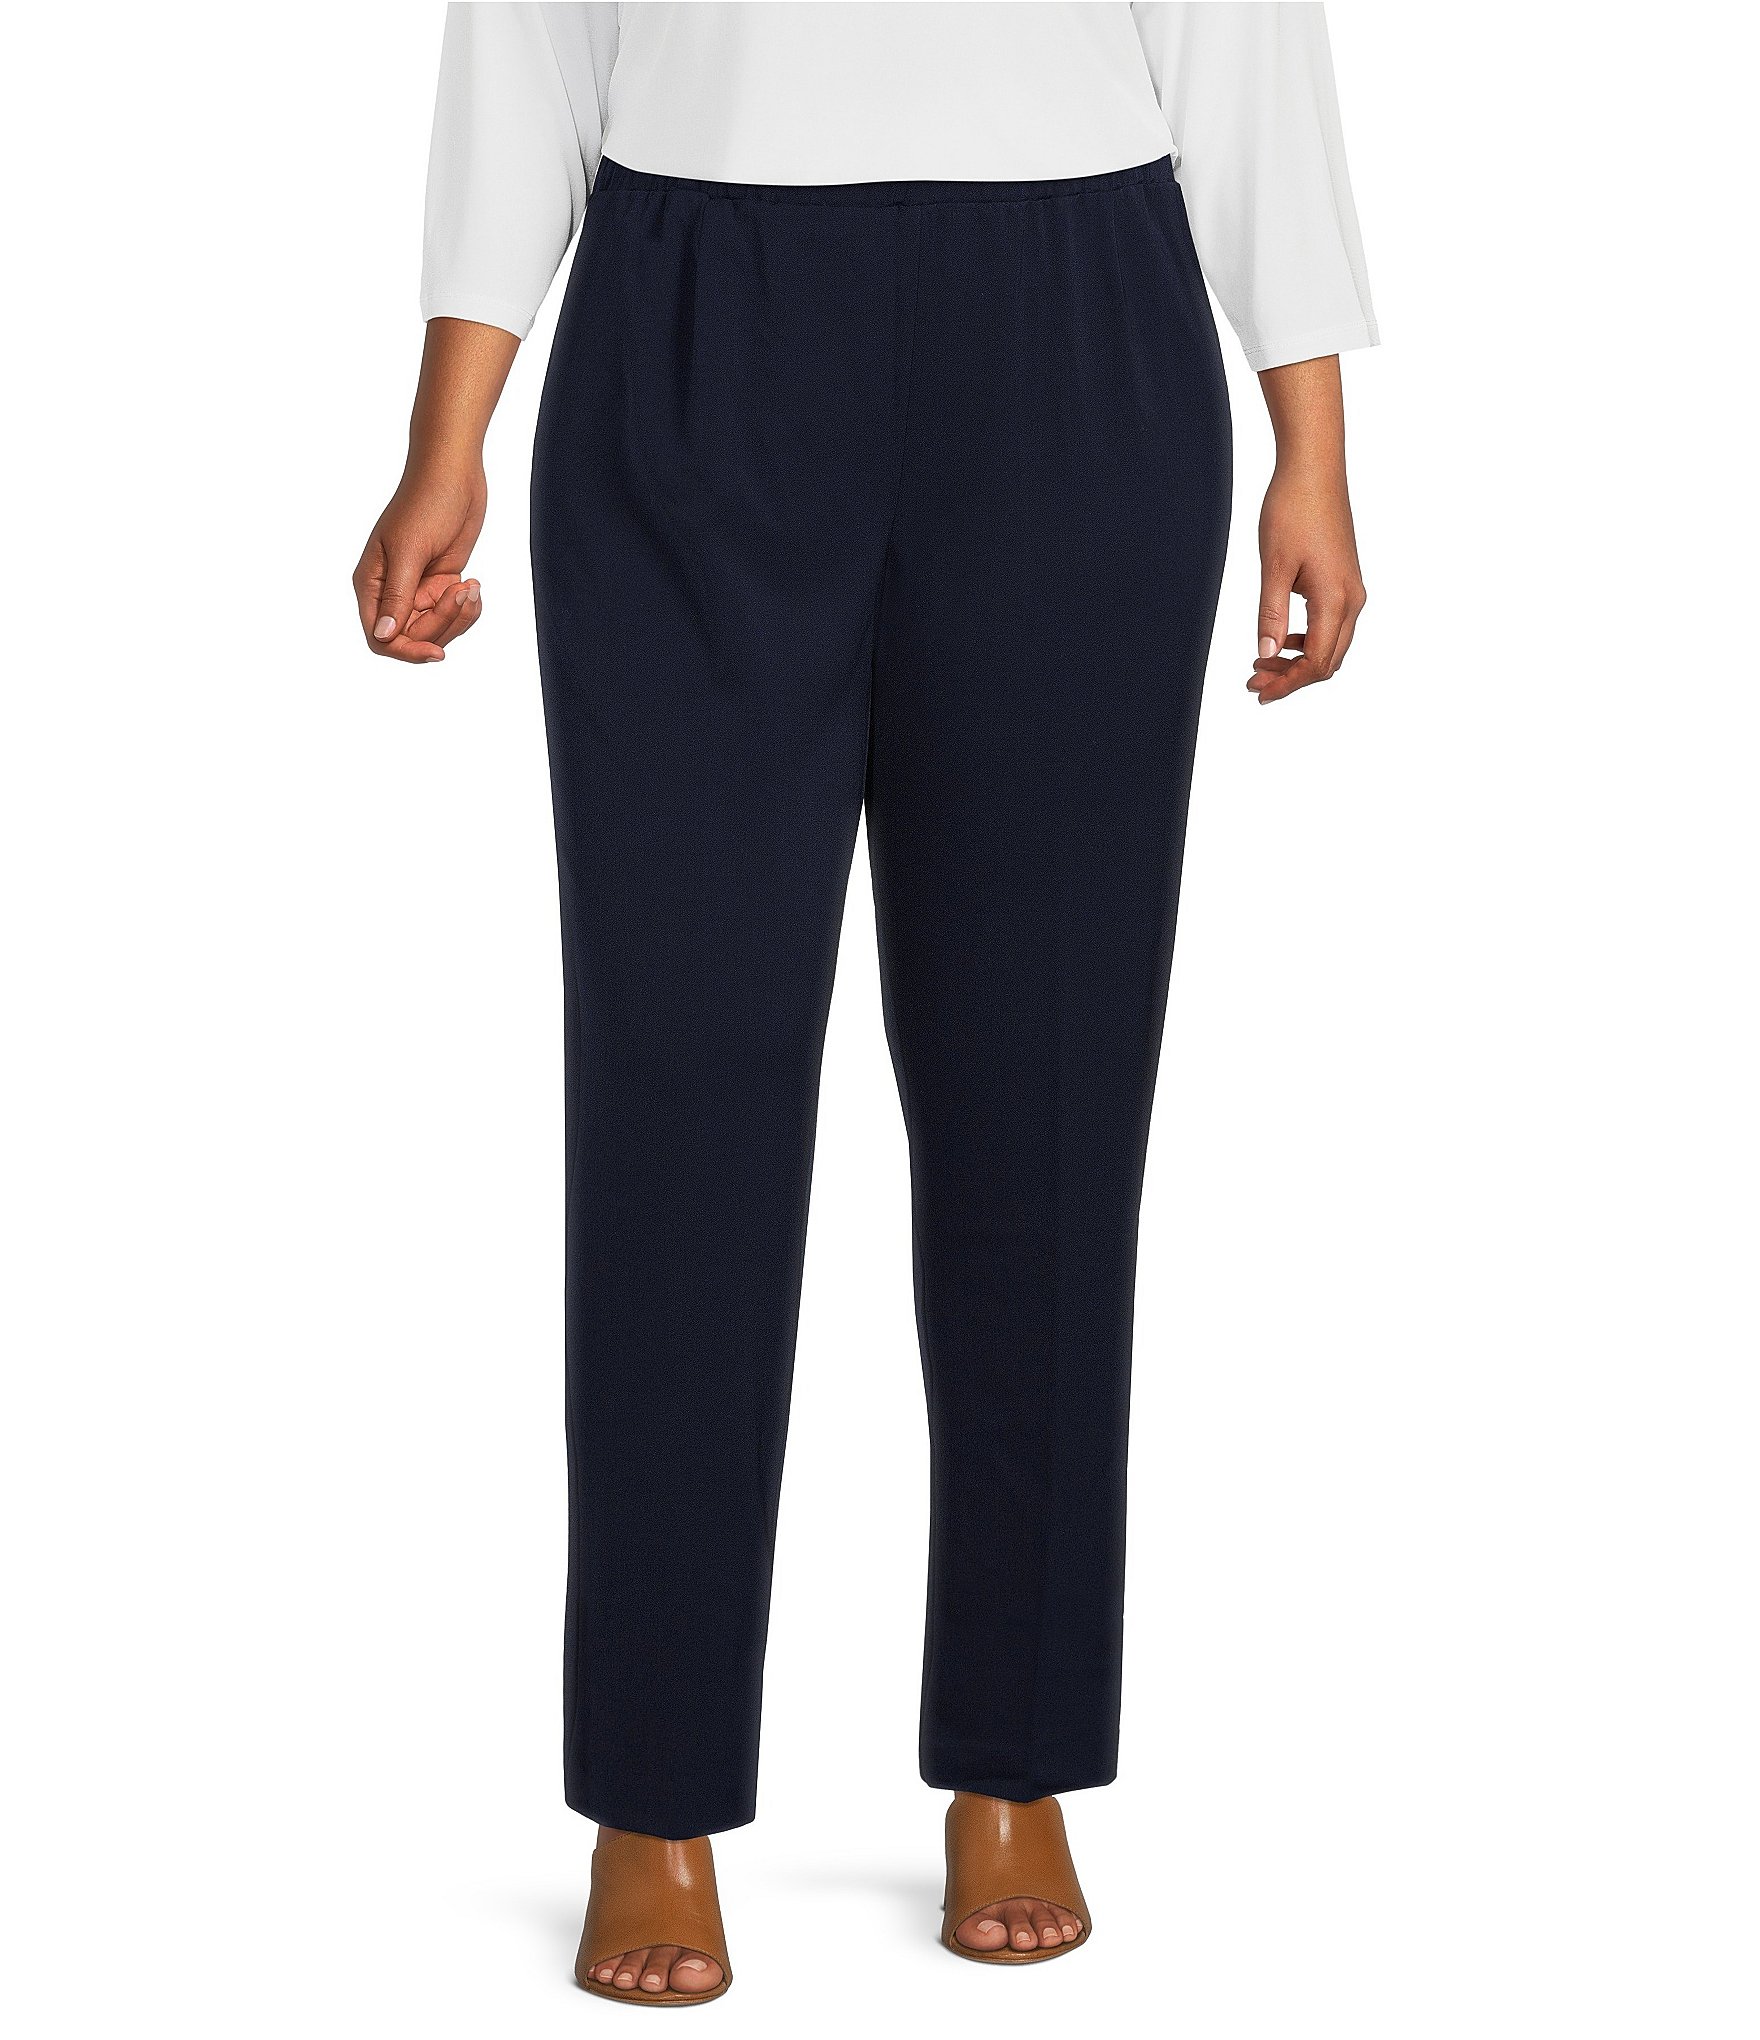 Tart Plus Size Women's 'Liviana' Print Jersey Pants, Size 3X - Blue